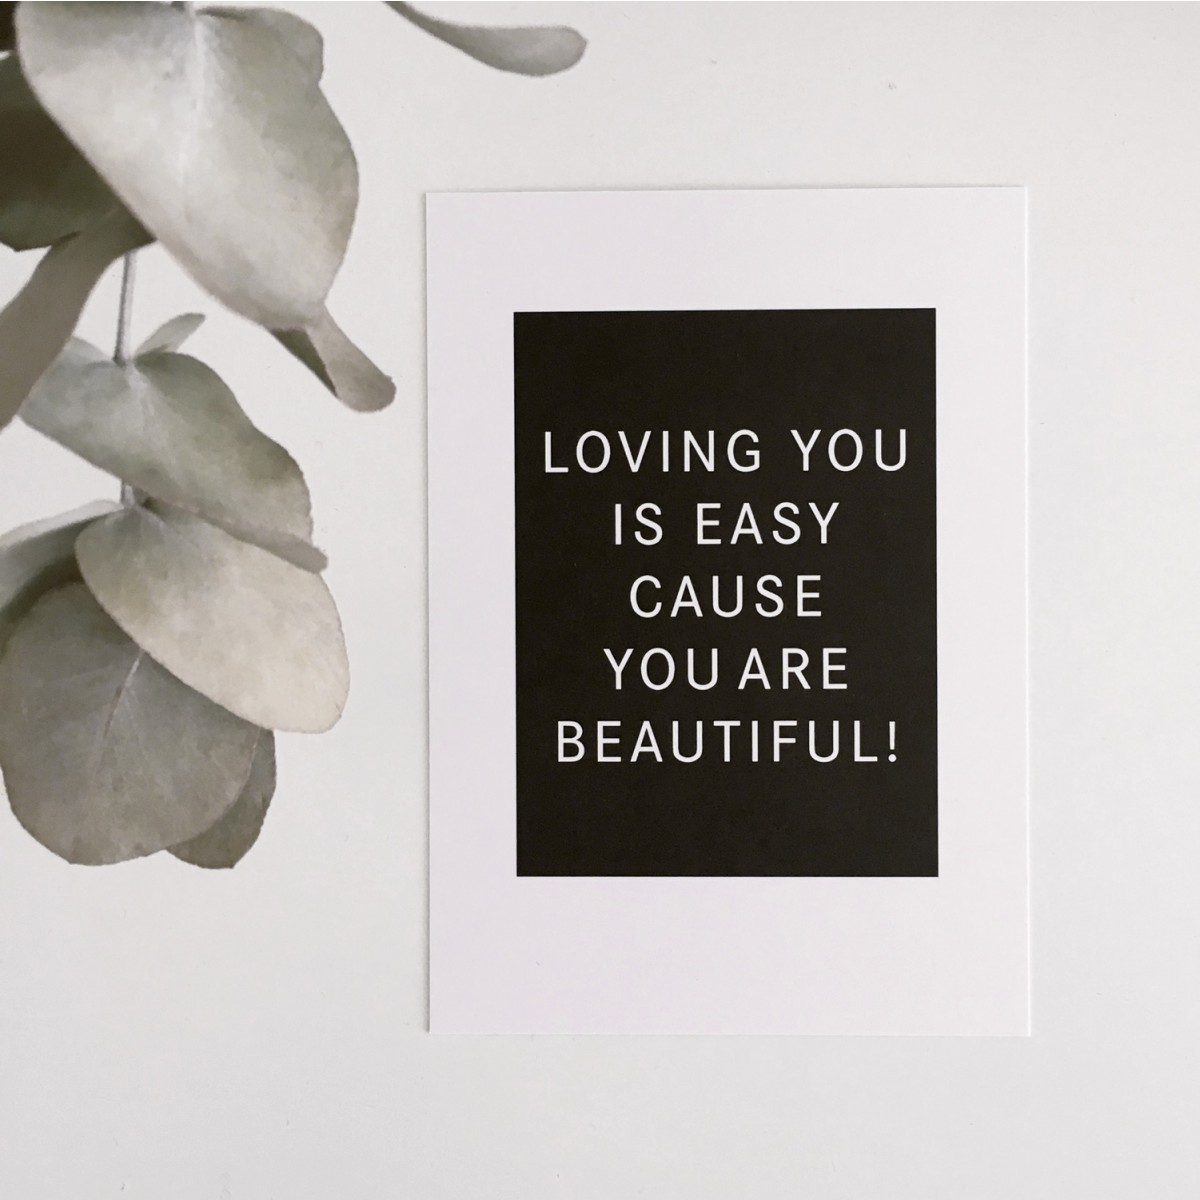 Love is the new black – Postkarten-Set "Love"